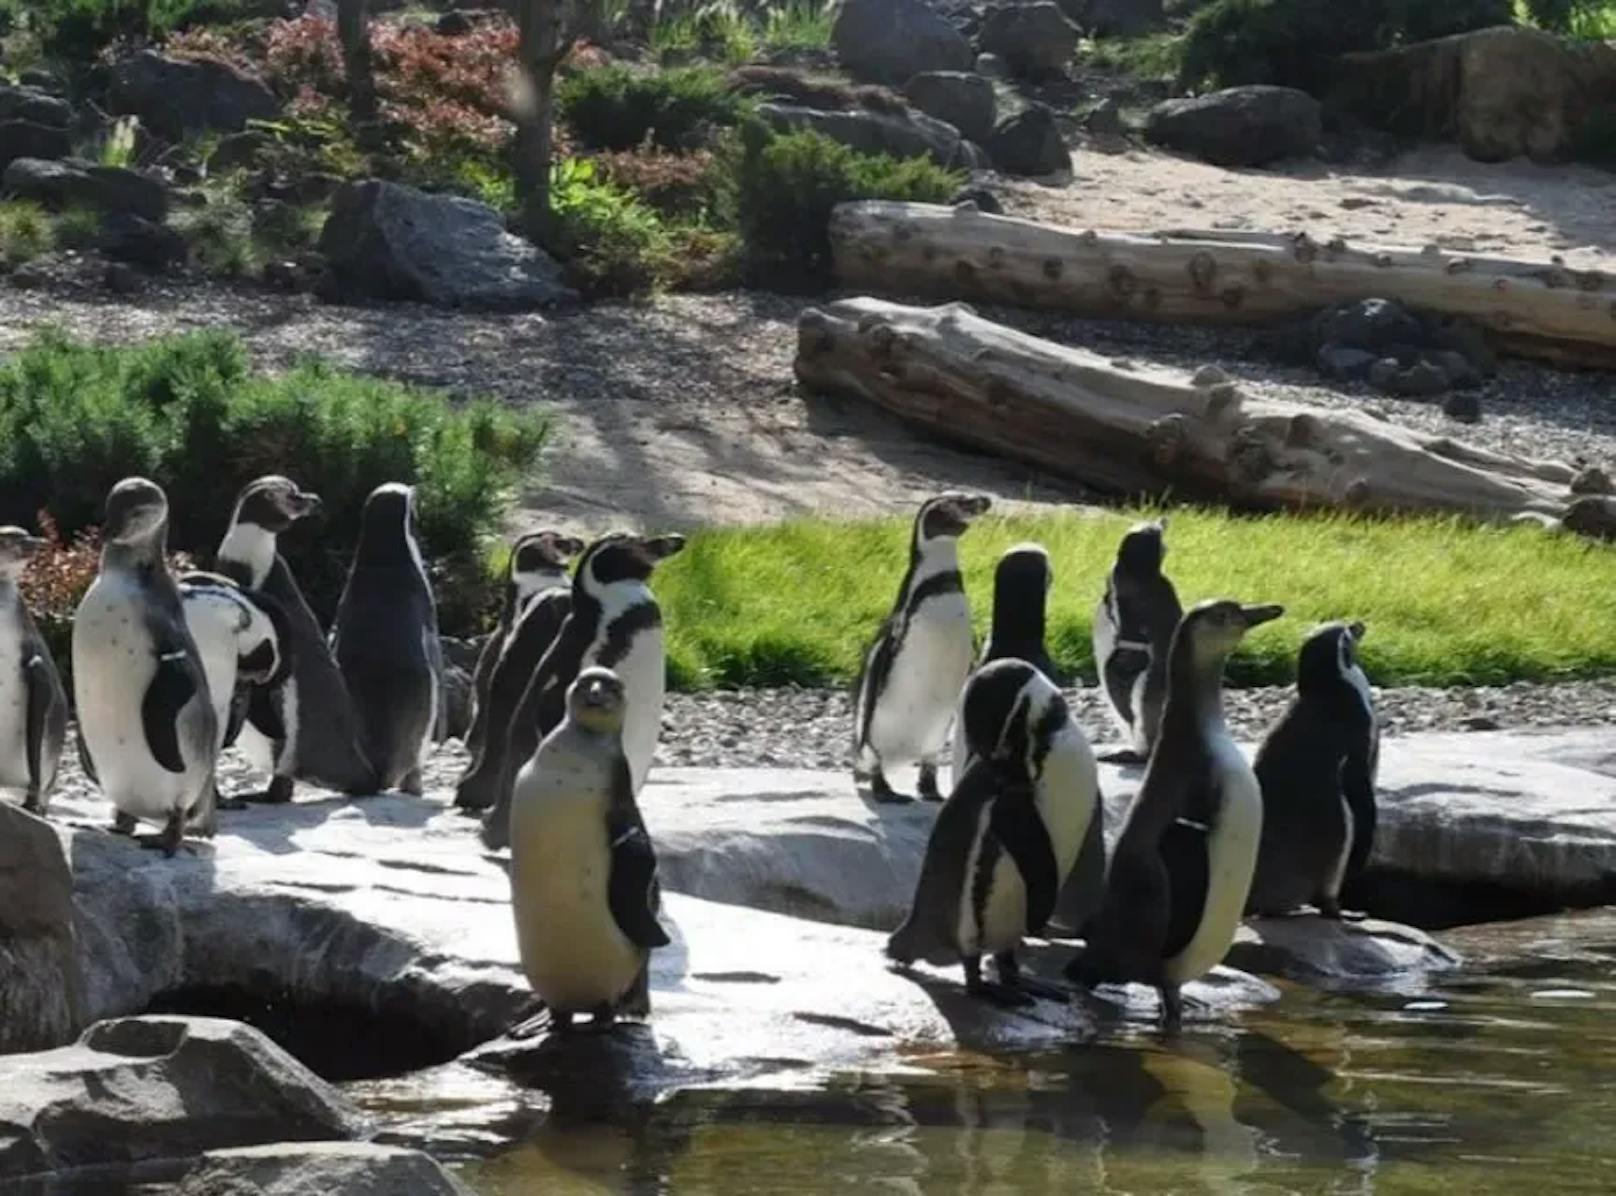 Pinguin in Zoo geköpft – nun ermittelt Kriminalpolizei